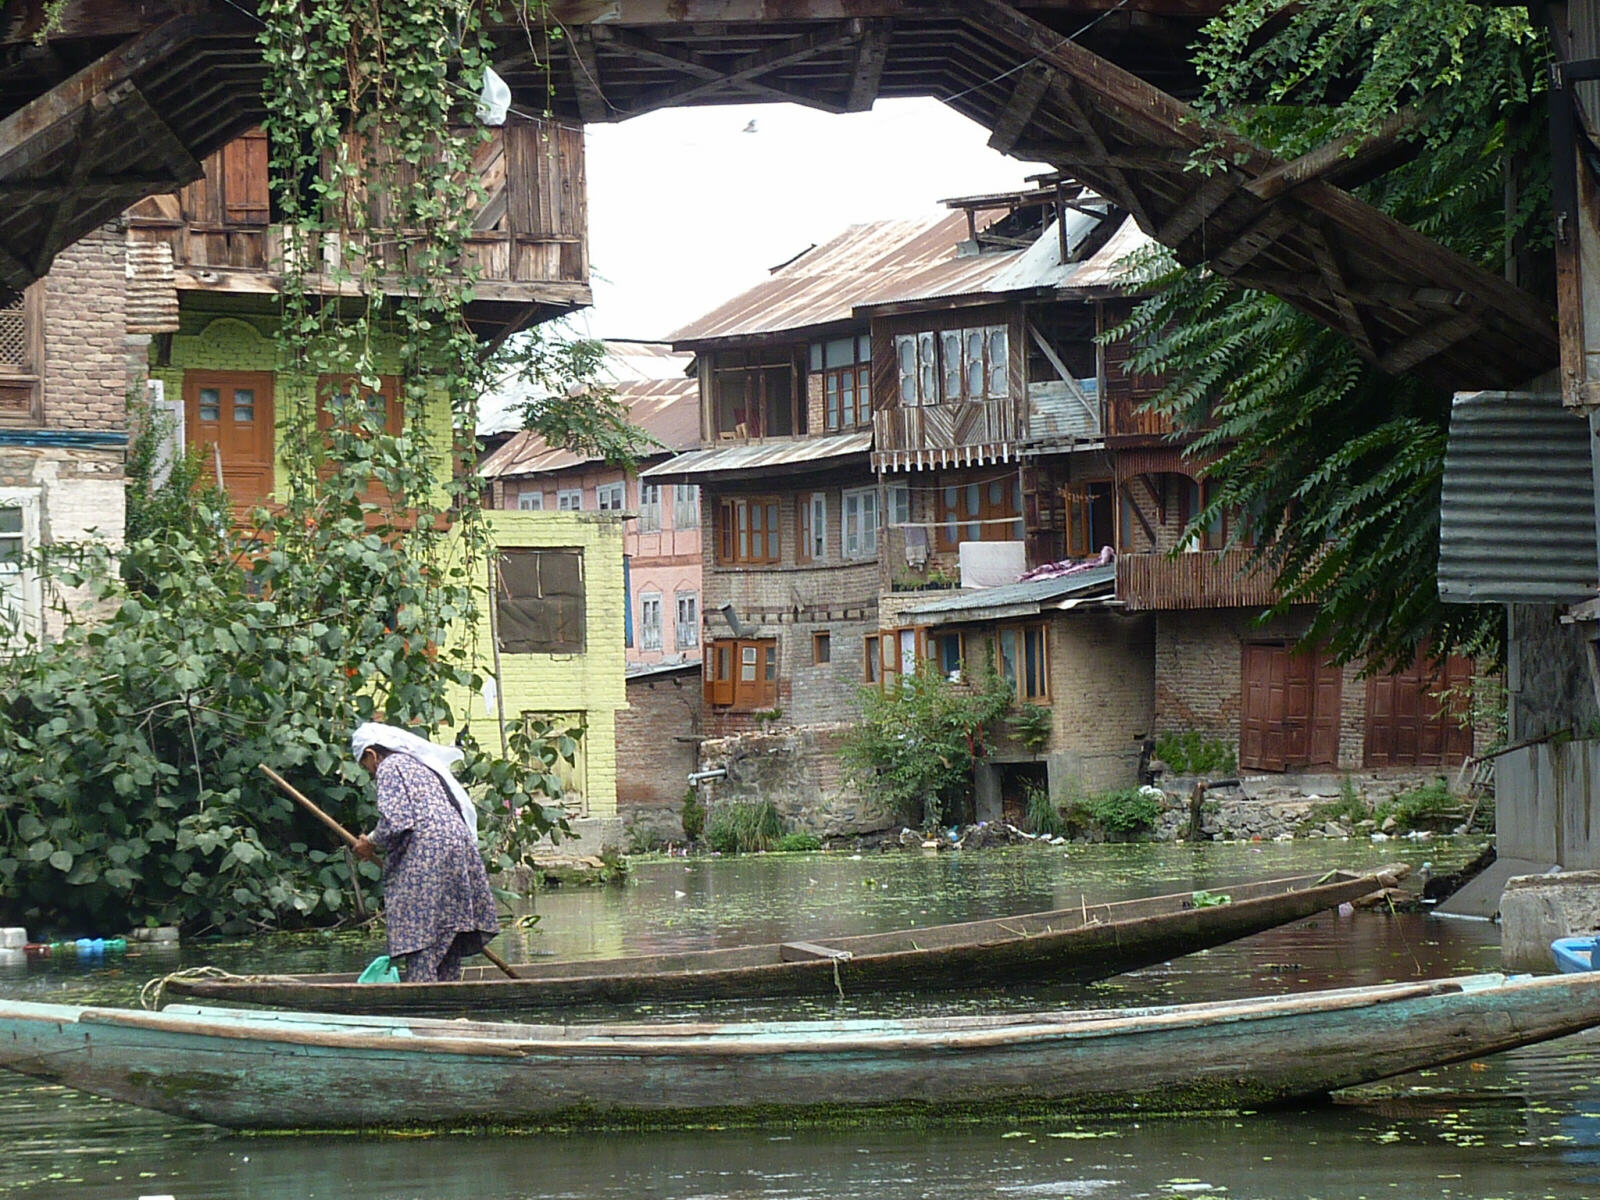 Canal through the old city in Srinagar, Kashmir, India